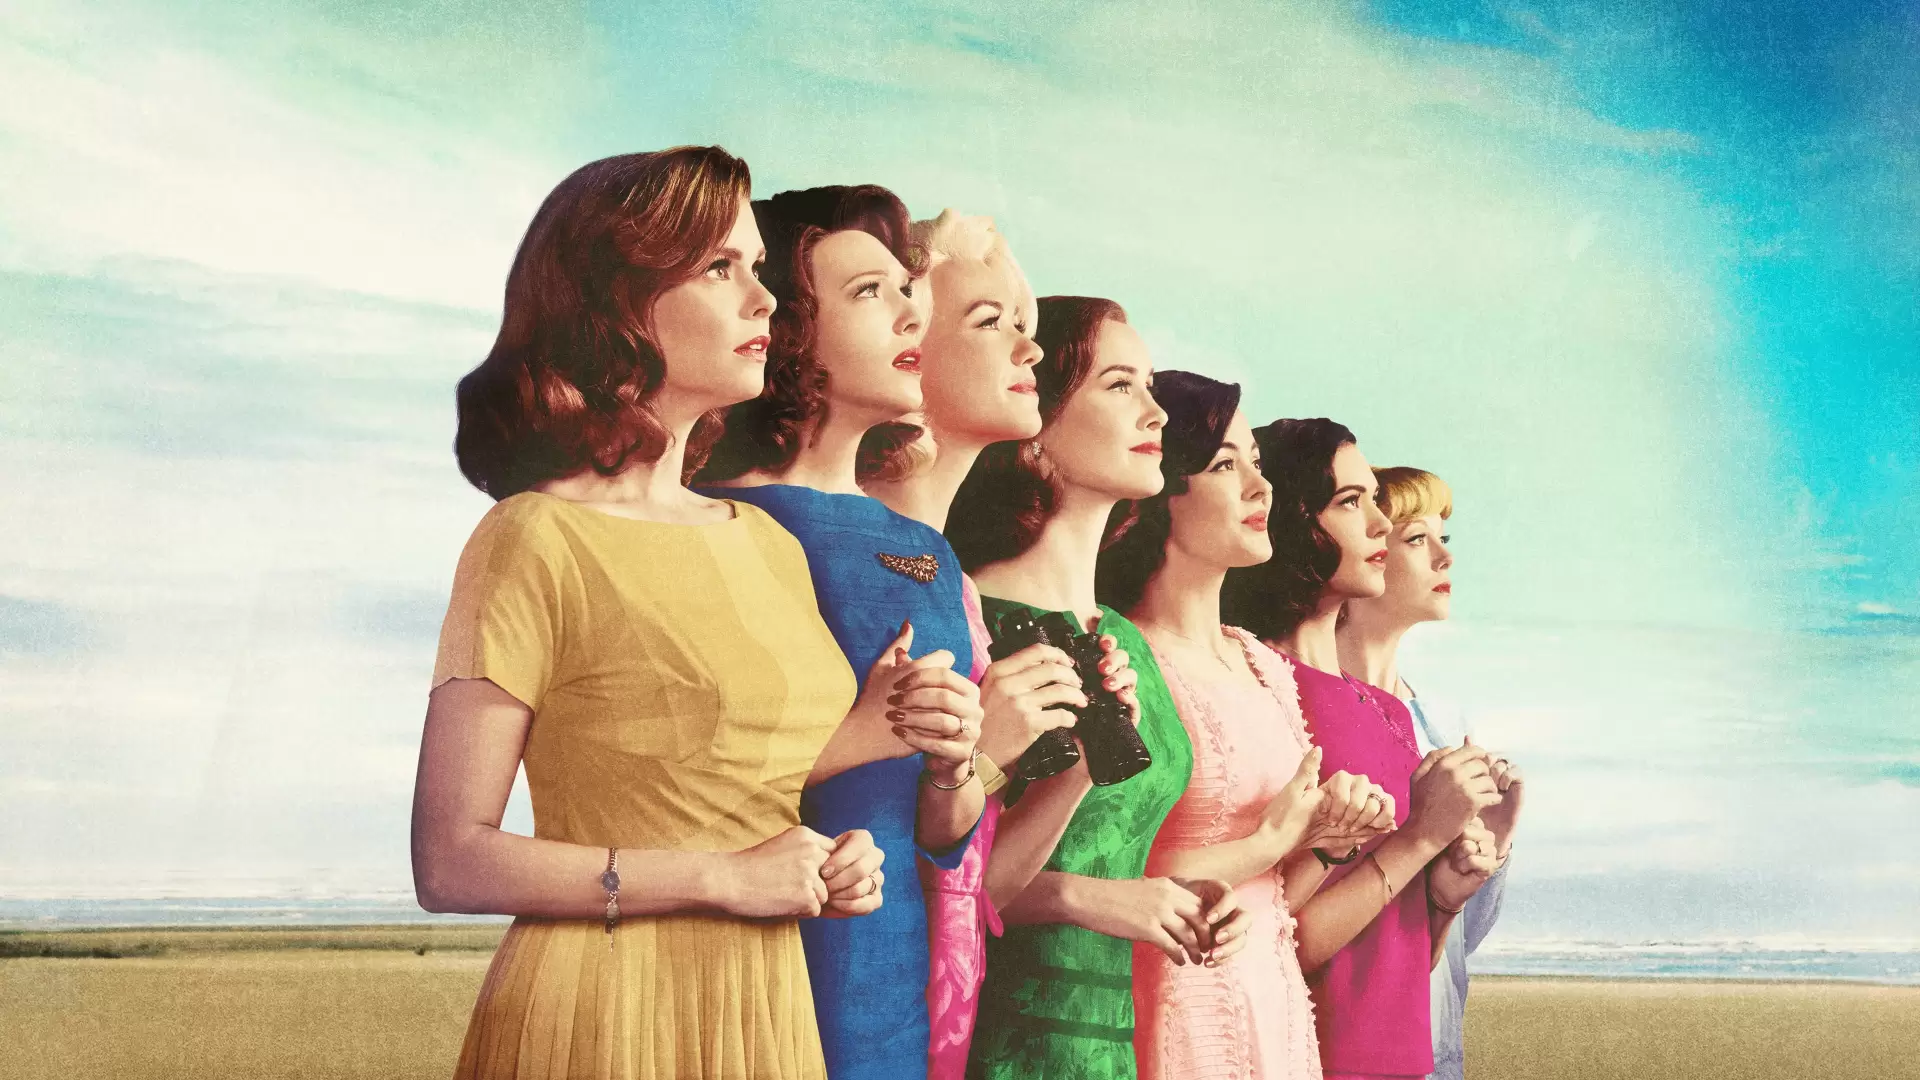 دانلود سریال The Astronaut Wives Club 2015